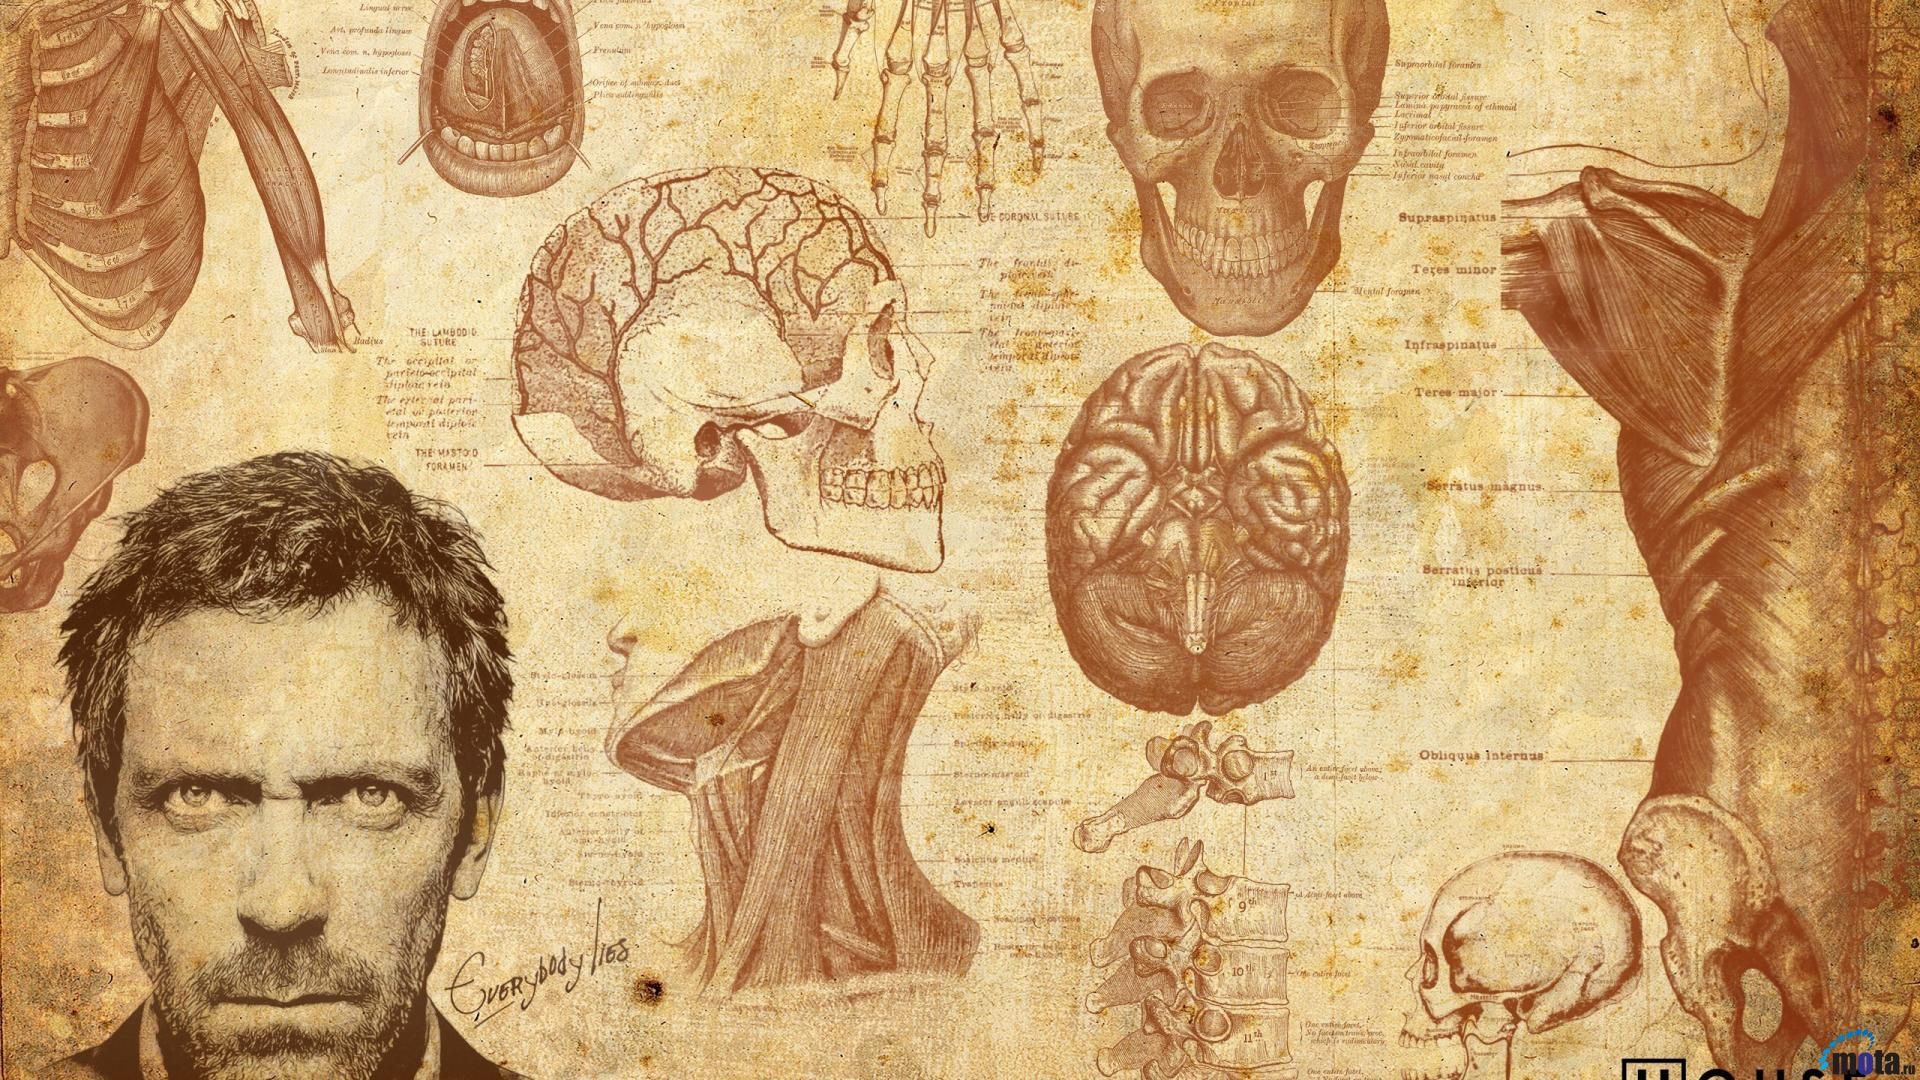 Medical Anatomy Art Wallpapers